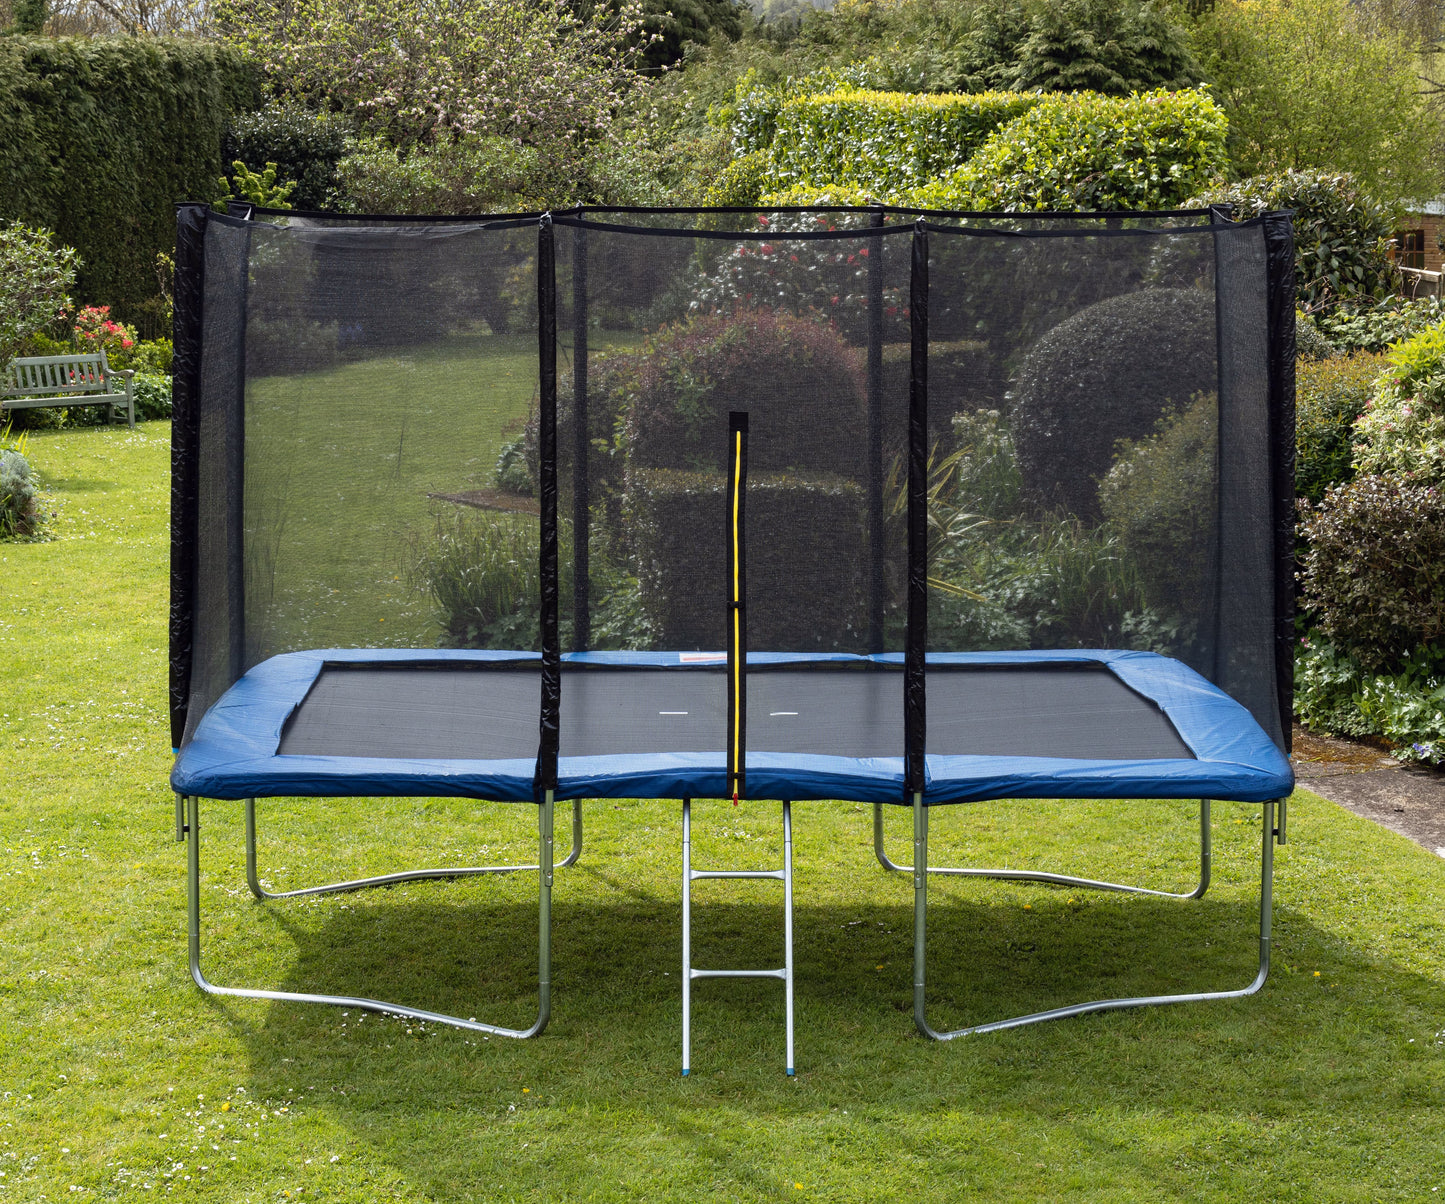 Kanga Blue 7x10ft trampoline package